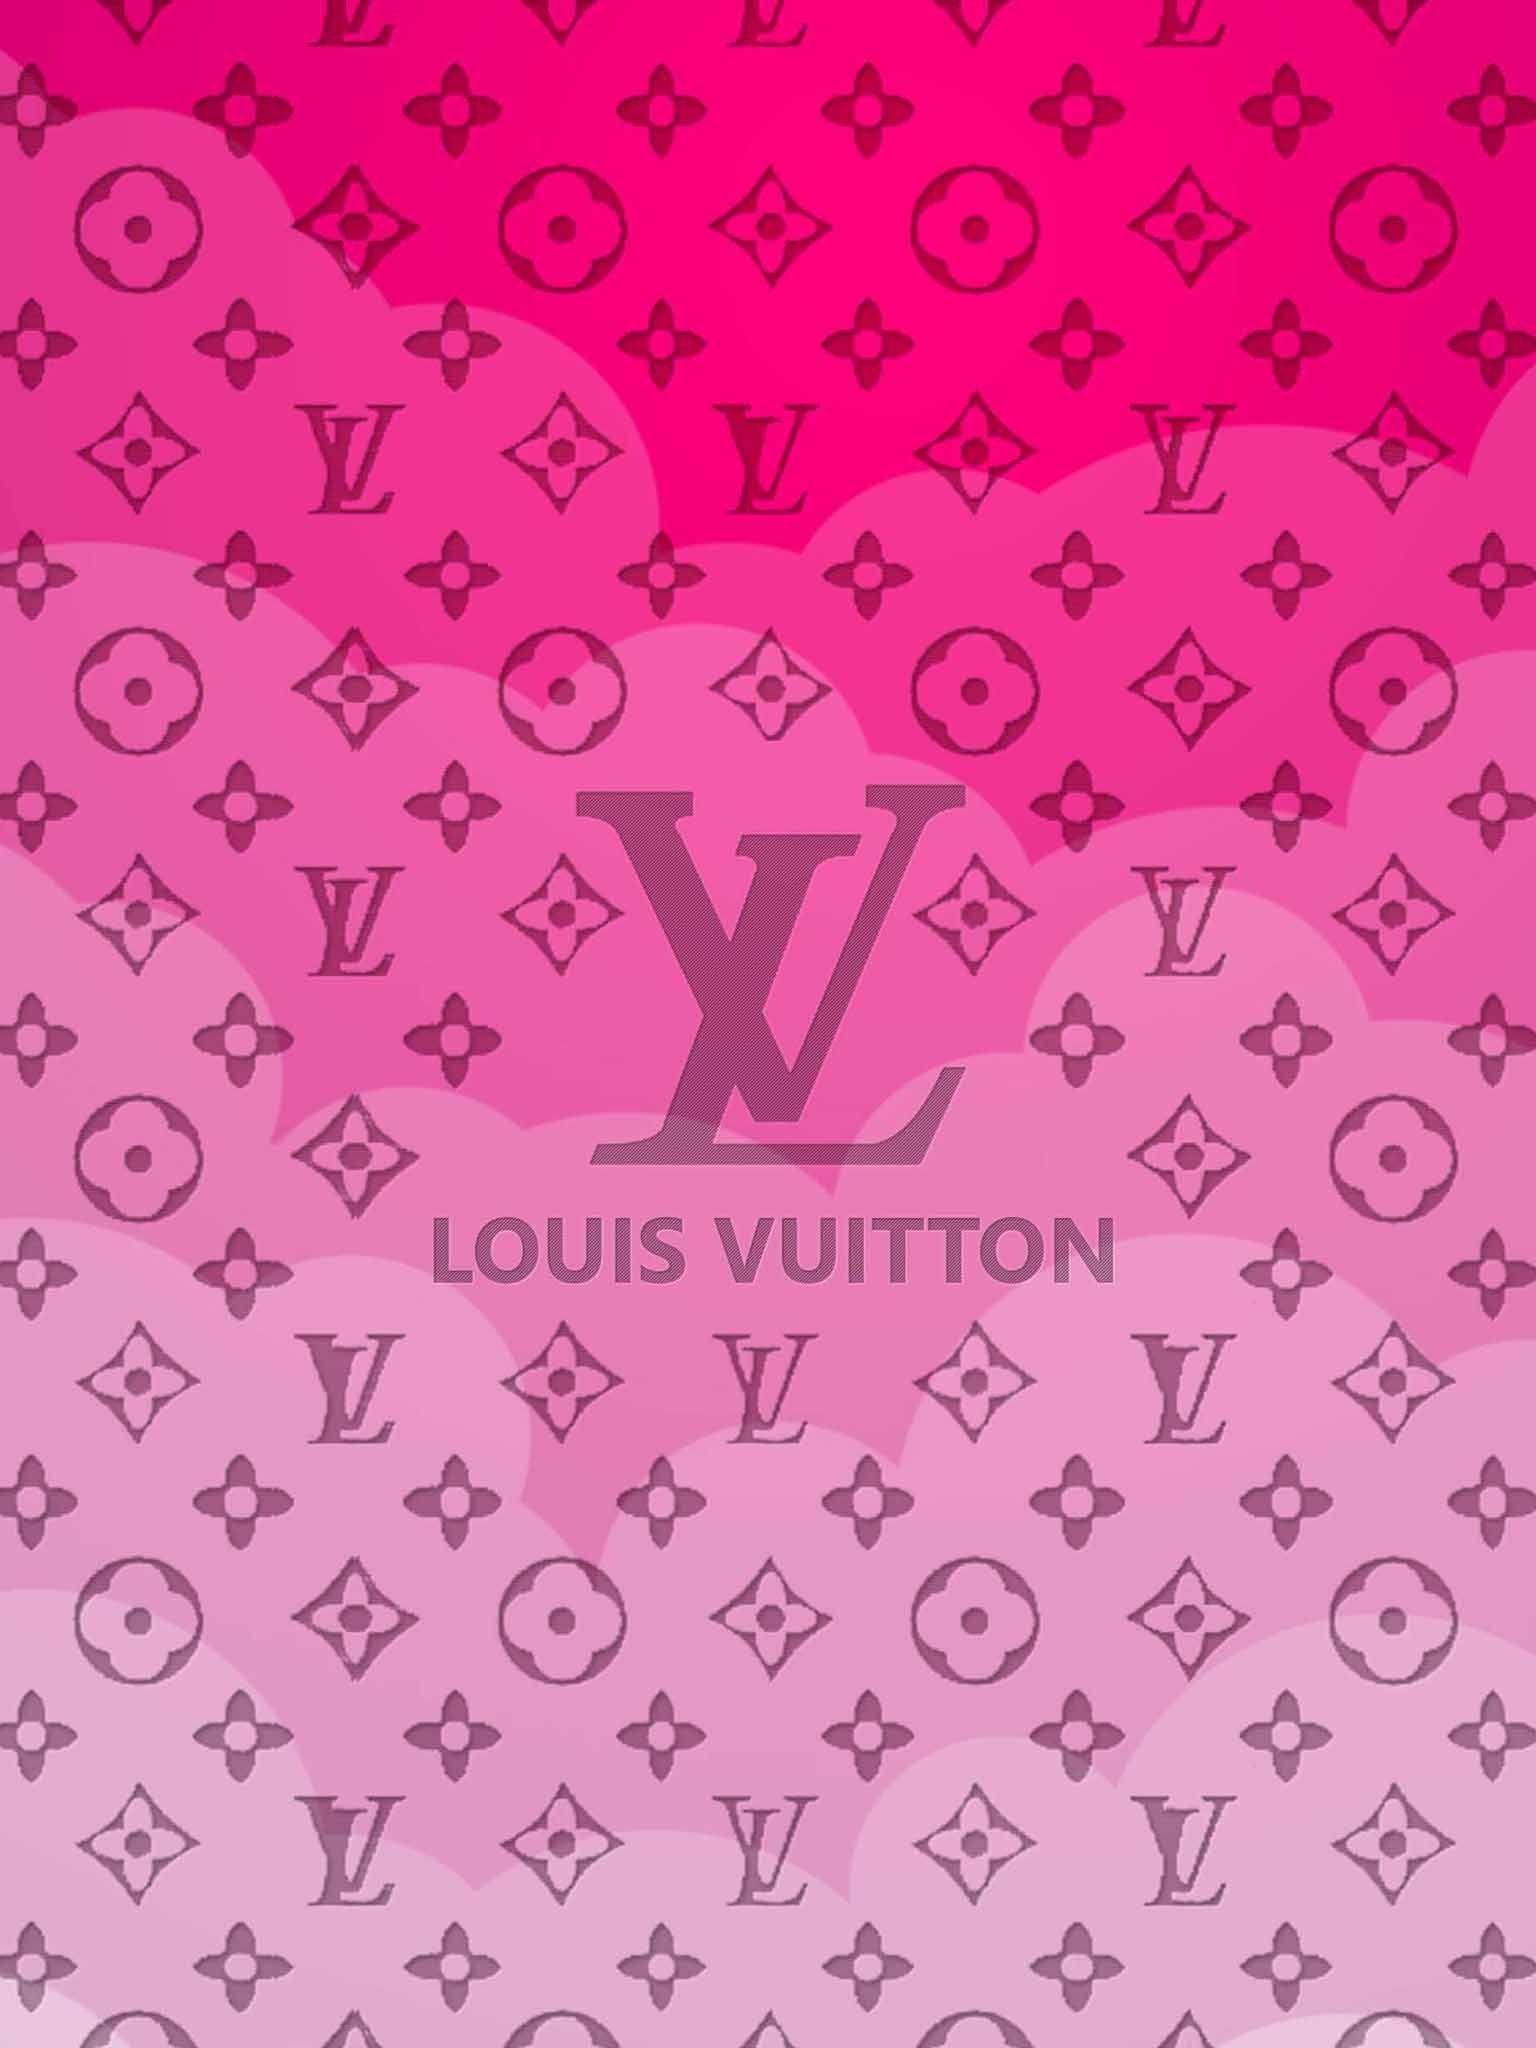 Supreme Desktop Louis Vuitton Wallpapers - Wallpaper Cave